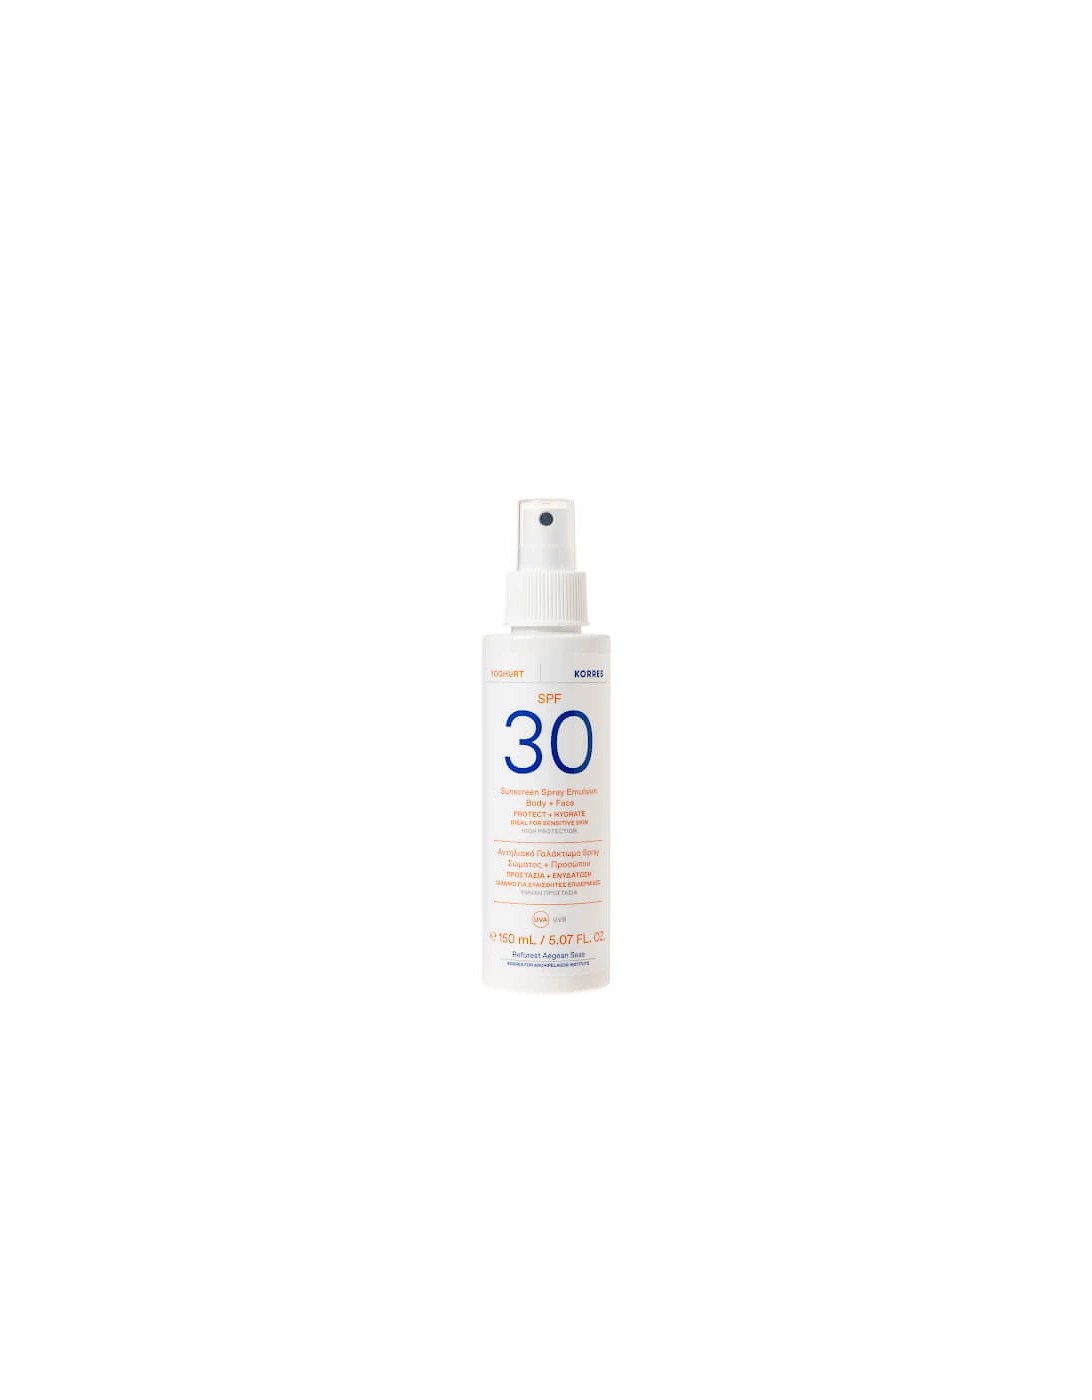 YOGHURT Spray Emulsion Body and Face SPF30 150ml, 2 of 1